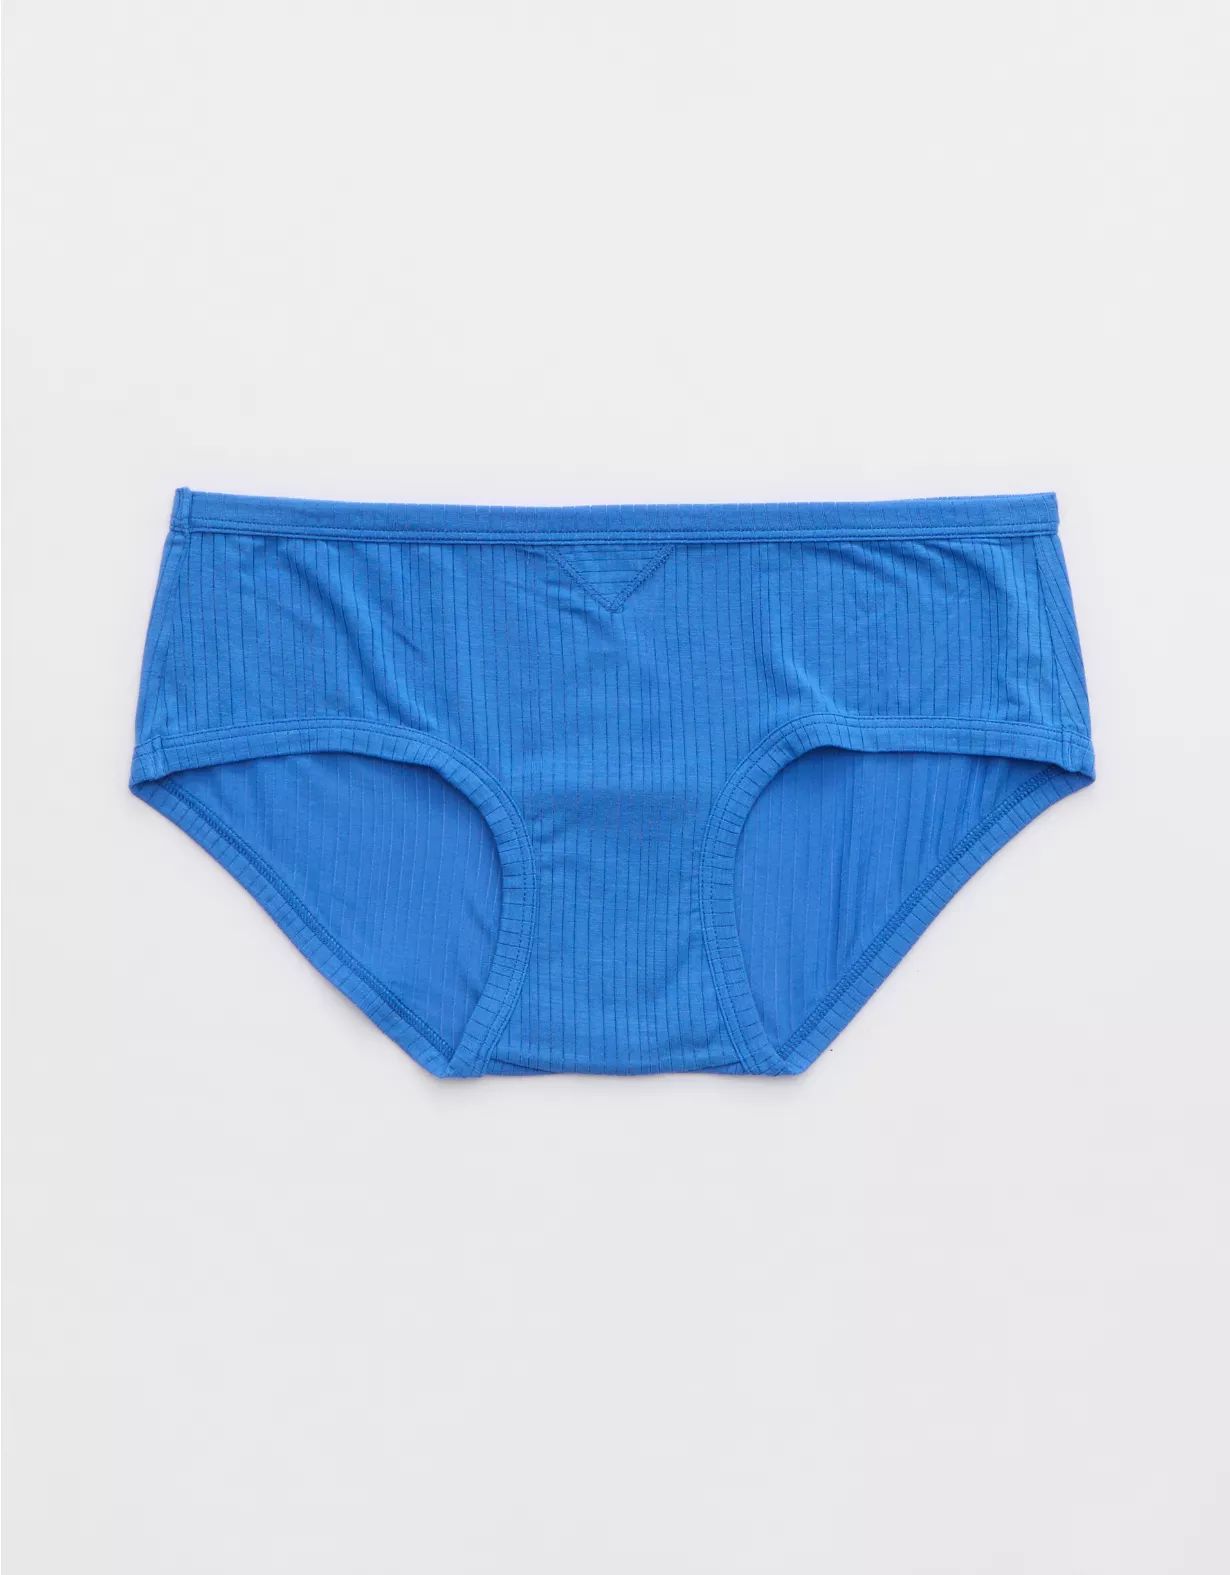 Superchill Modal Rib Boybrief Underwear | Aerie